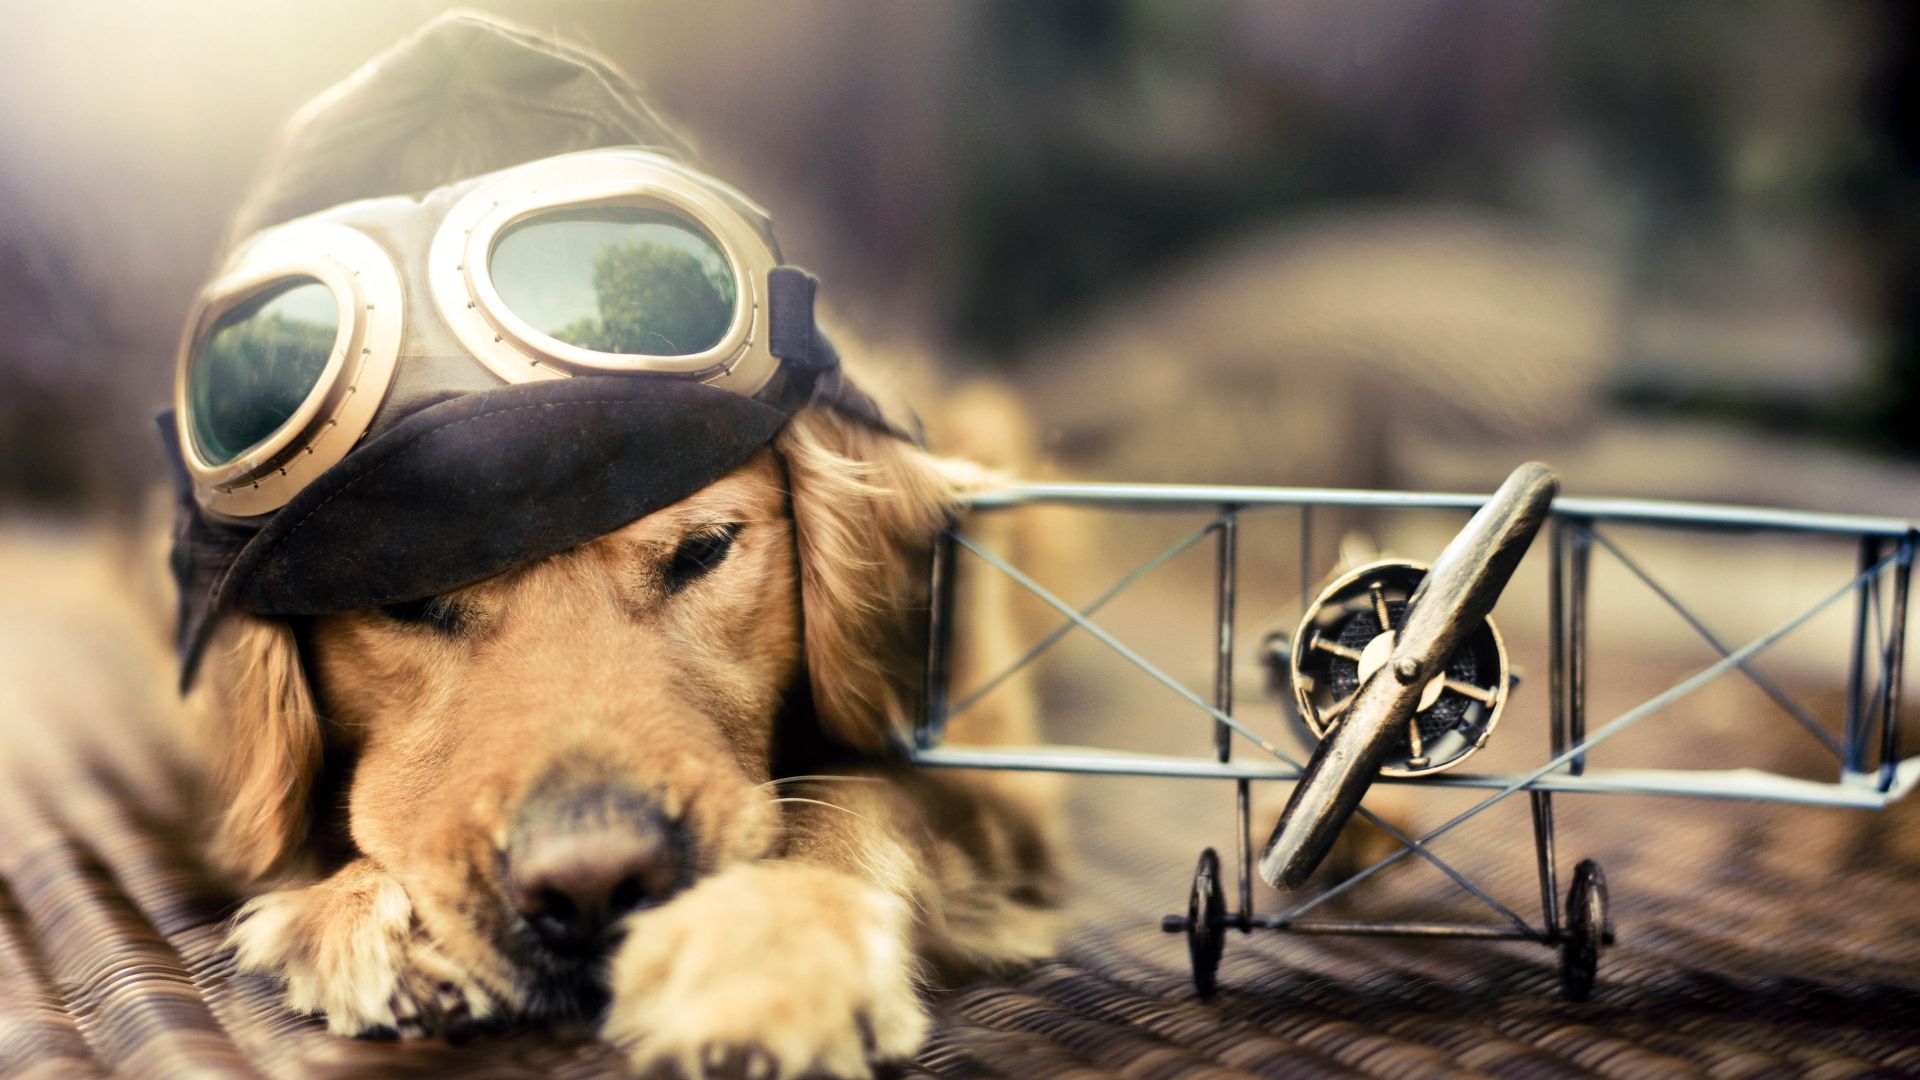 Wallpaper Puppy, dog, plane, glasses, pet animal